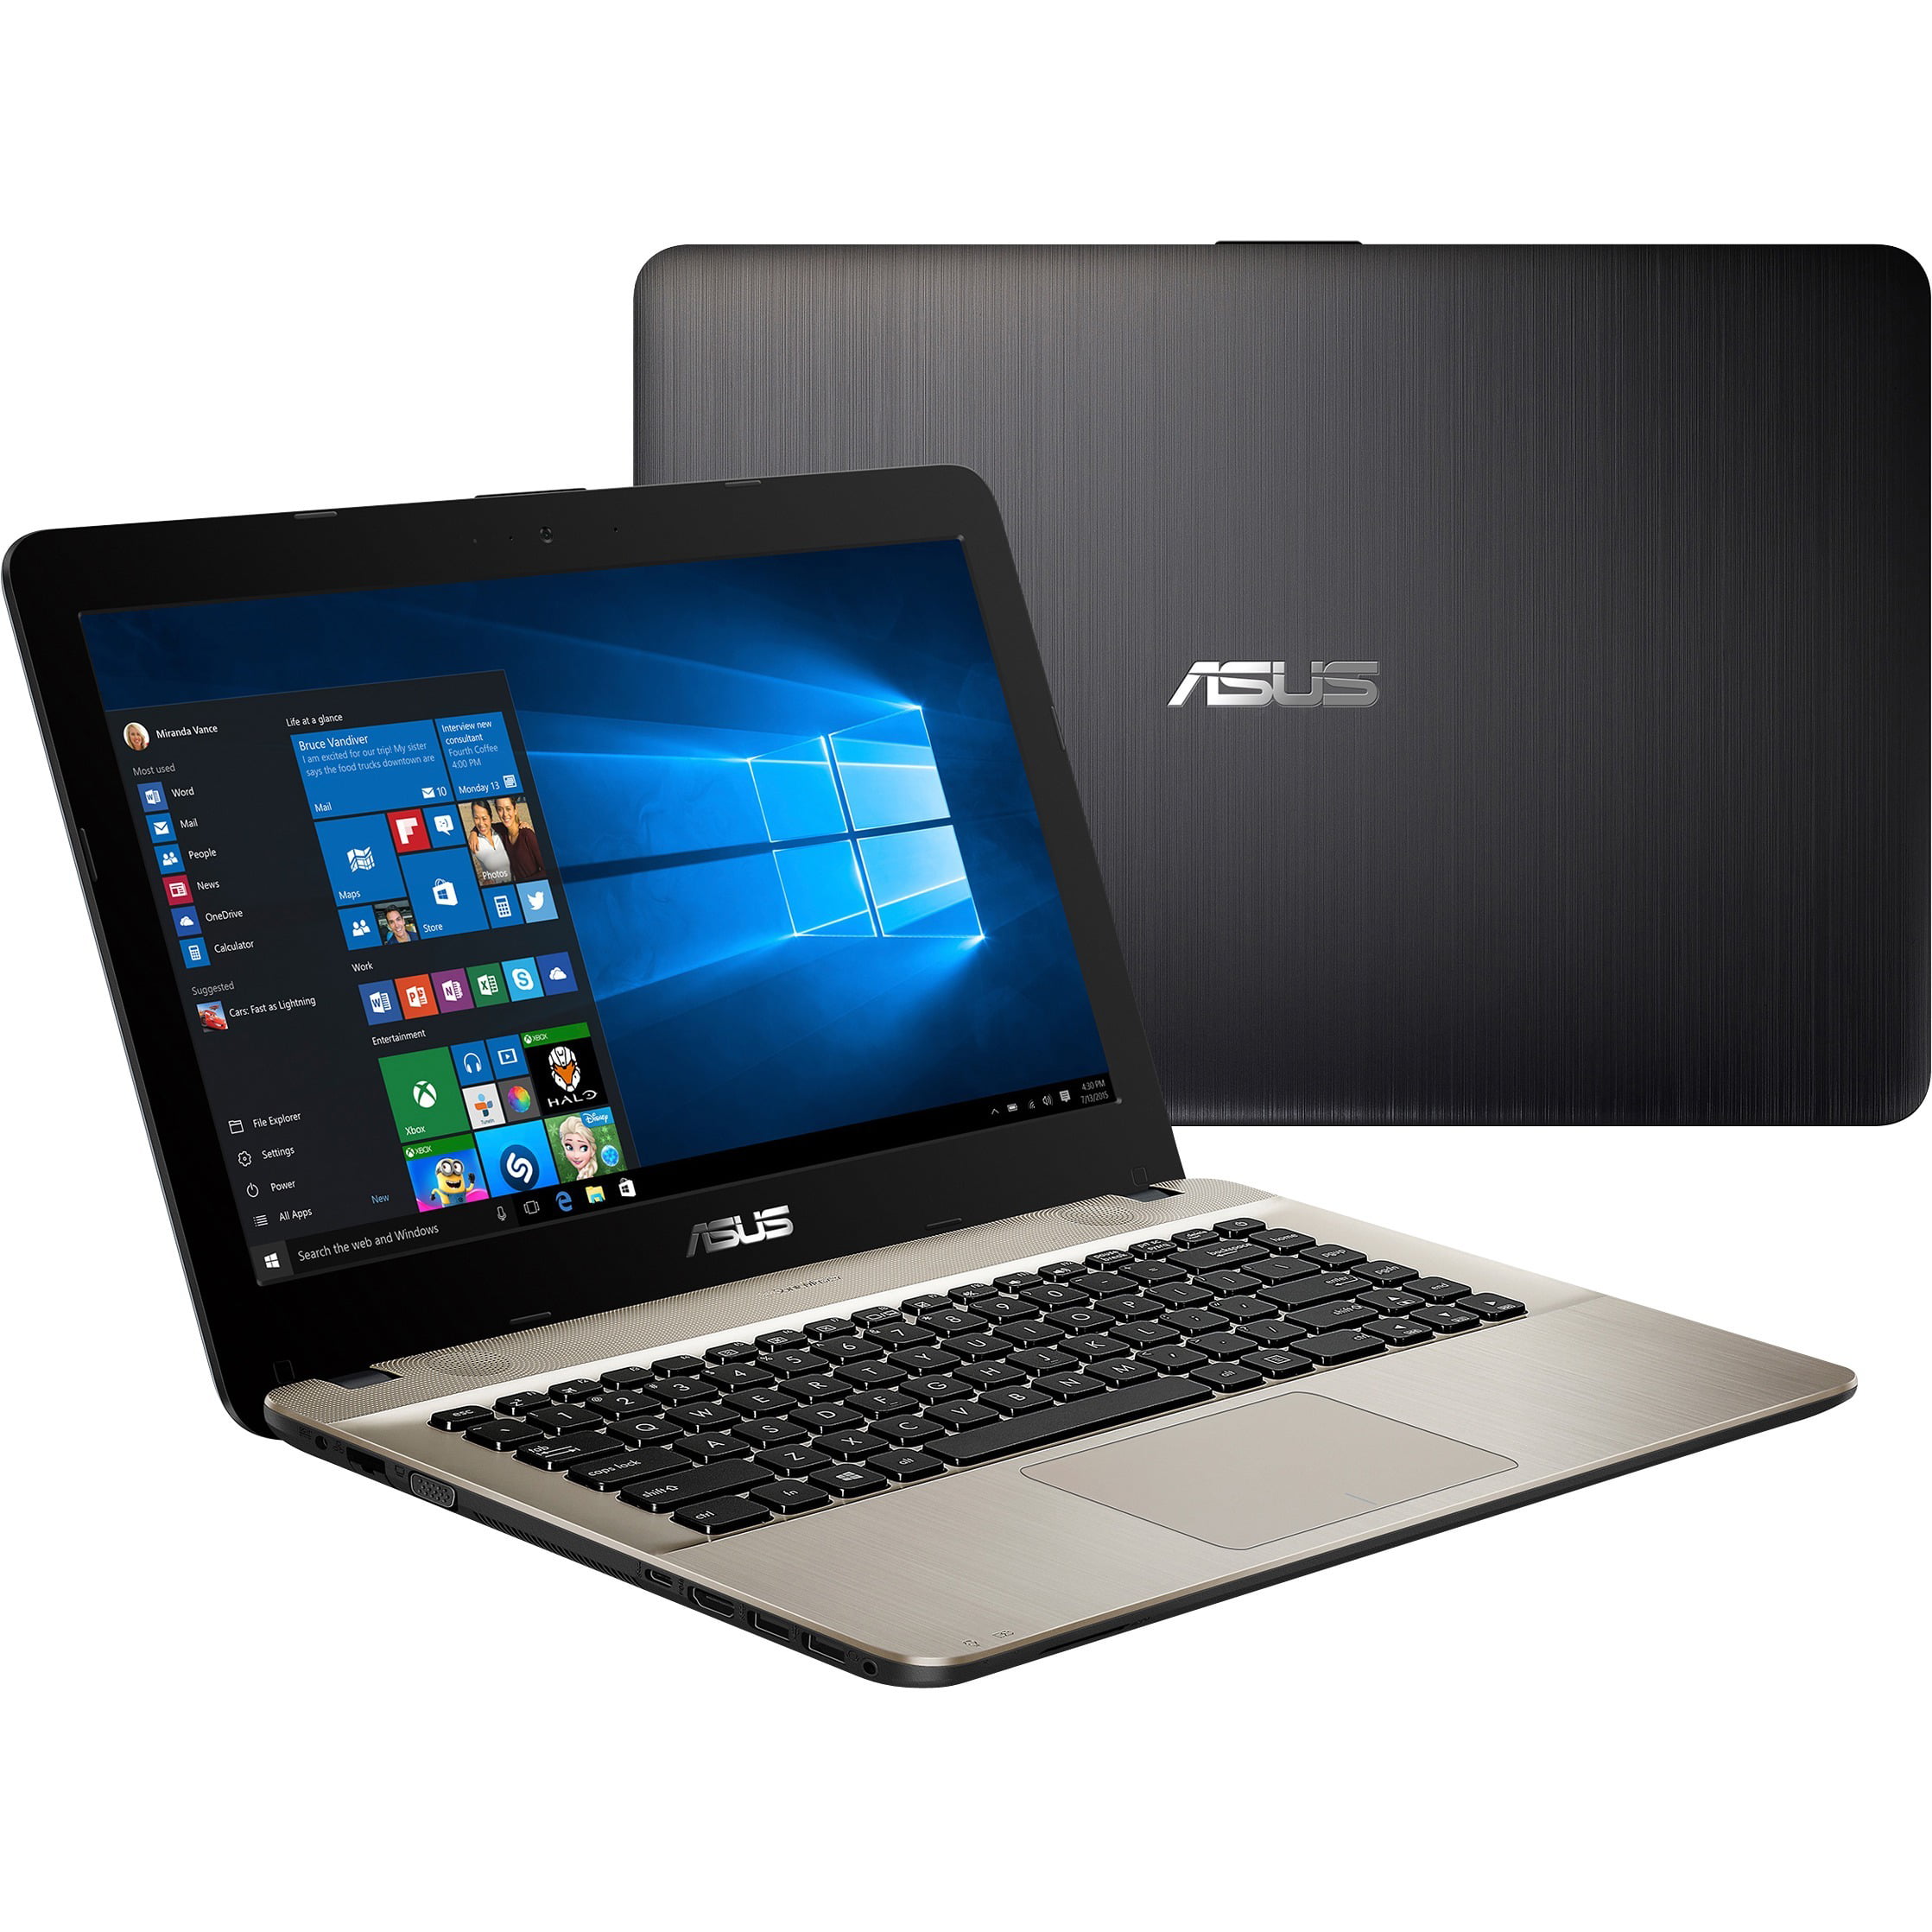 Asus VivoBook 14" Full HD Laptop, AMD A-Series A9-9420, 8GB RAM, 256GB